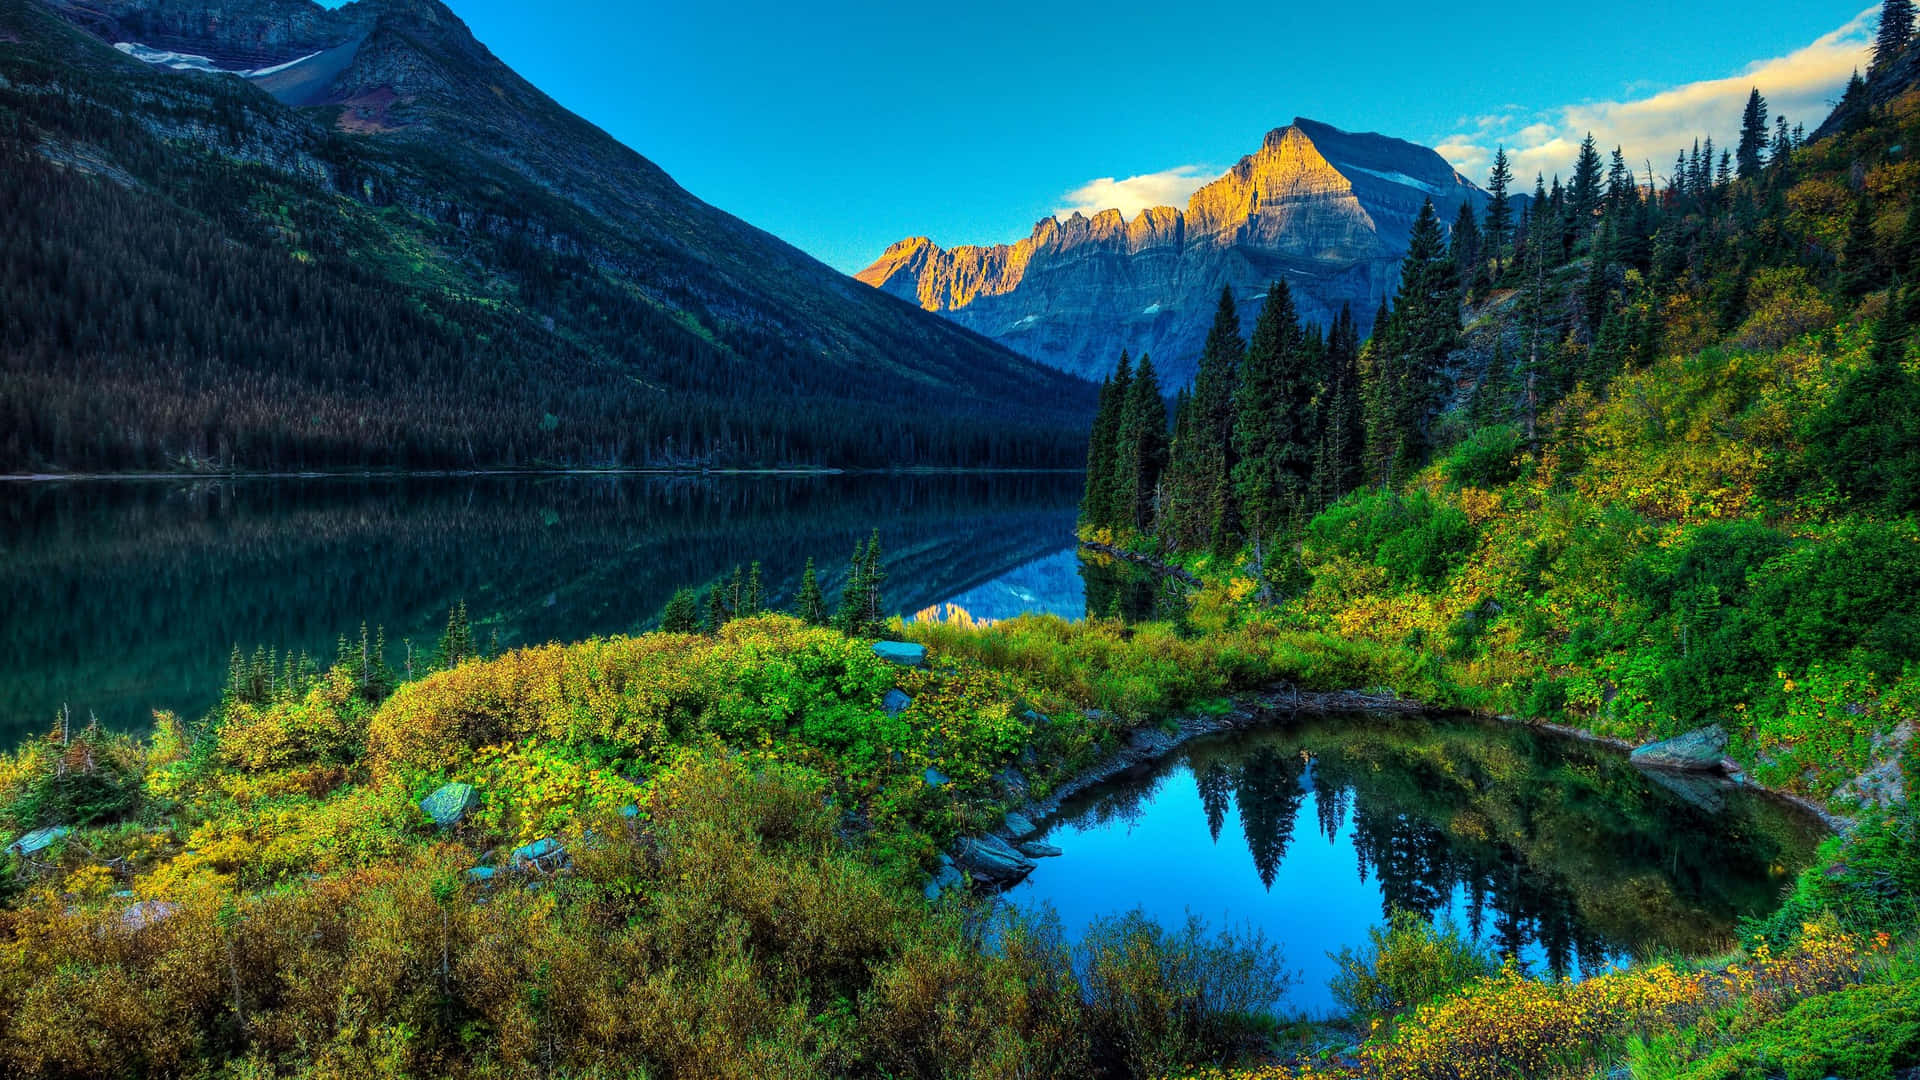 1440p Travel Mountain Lake Background